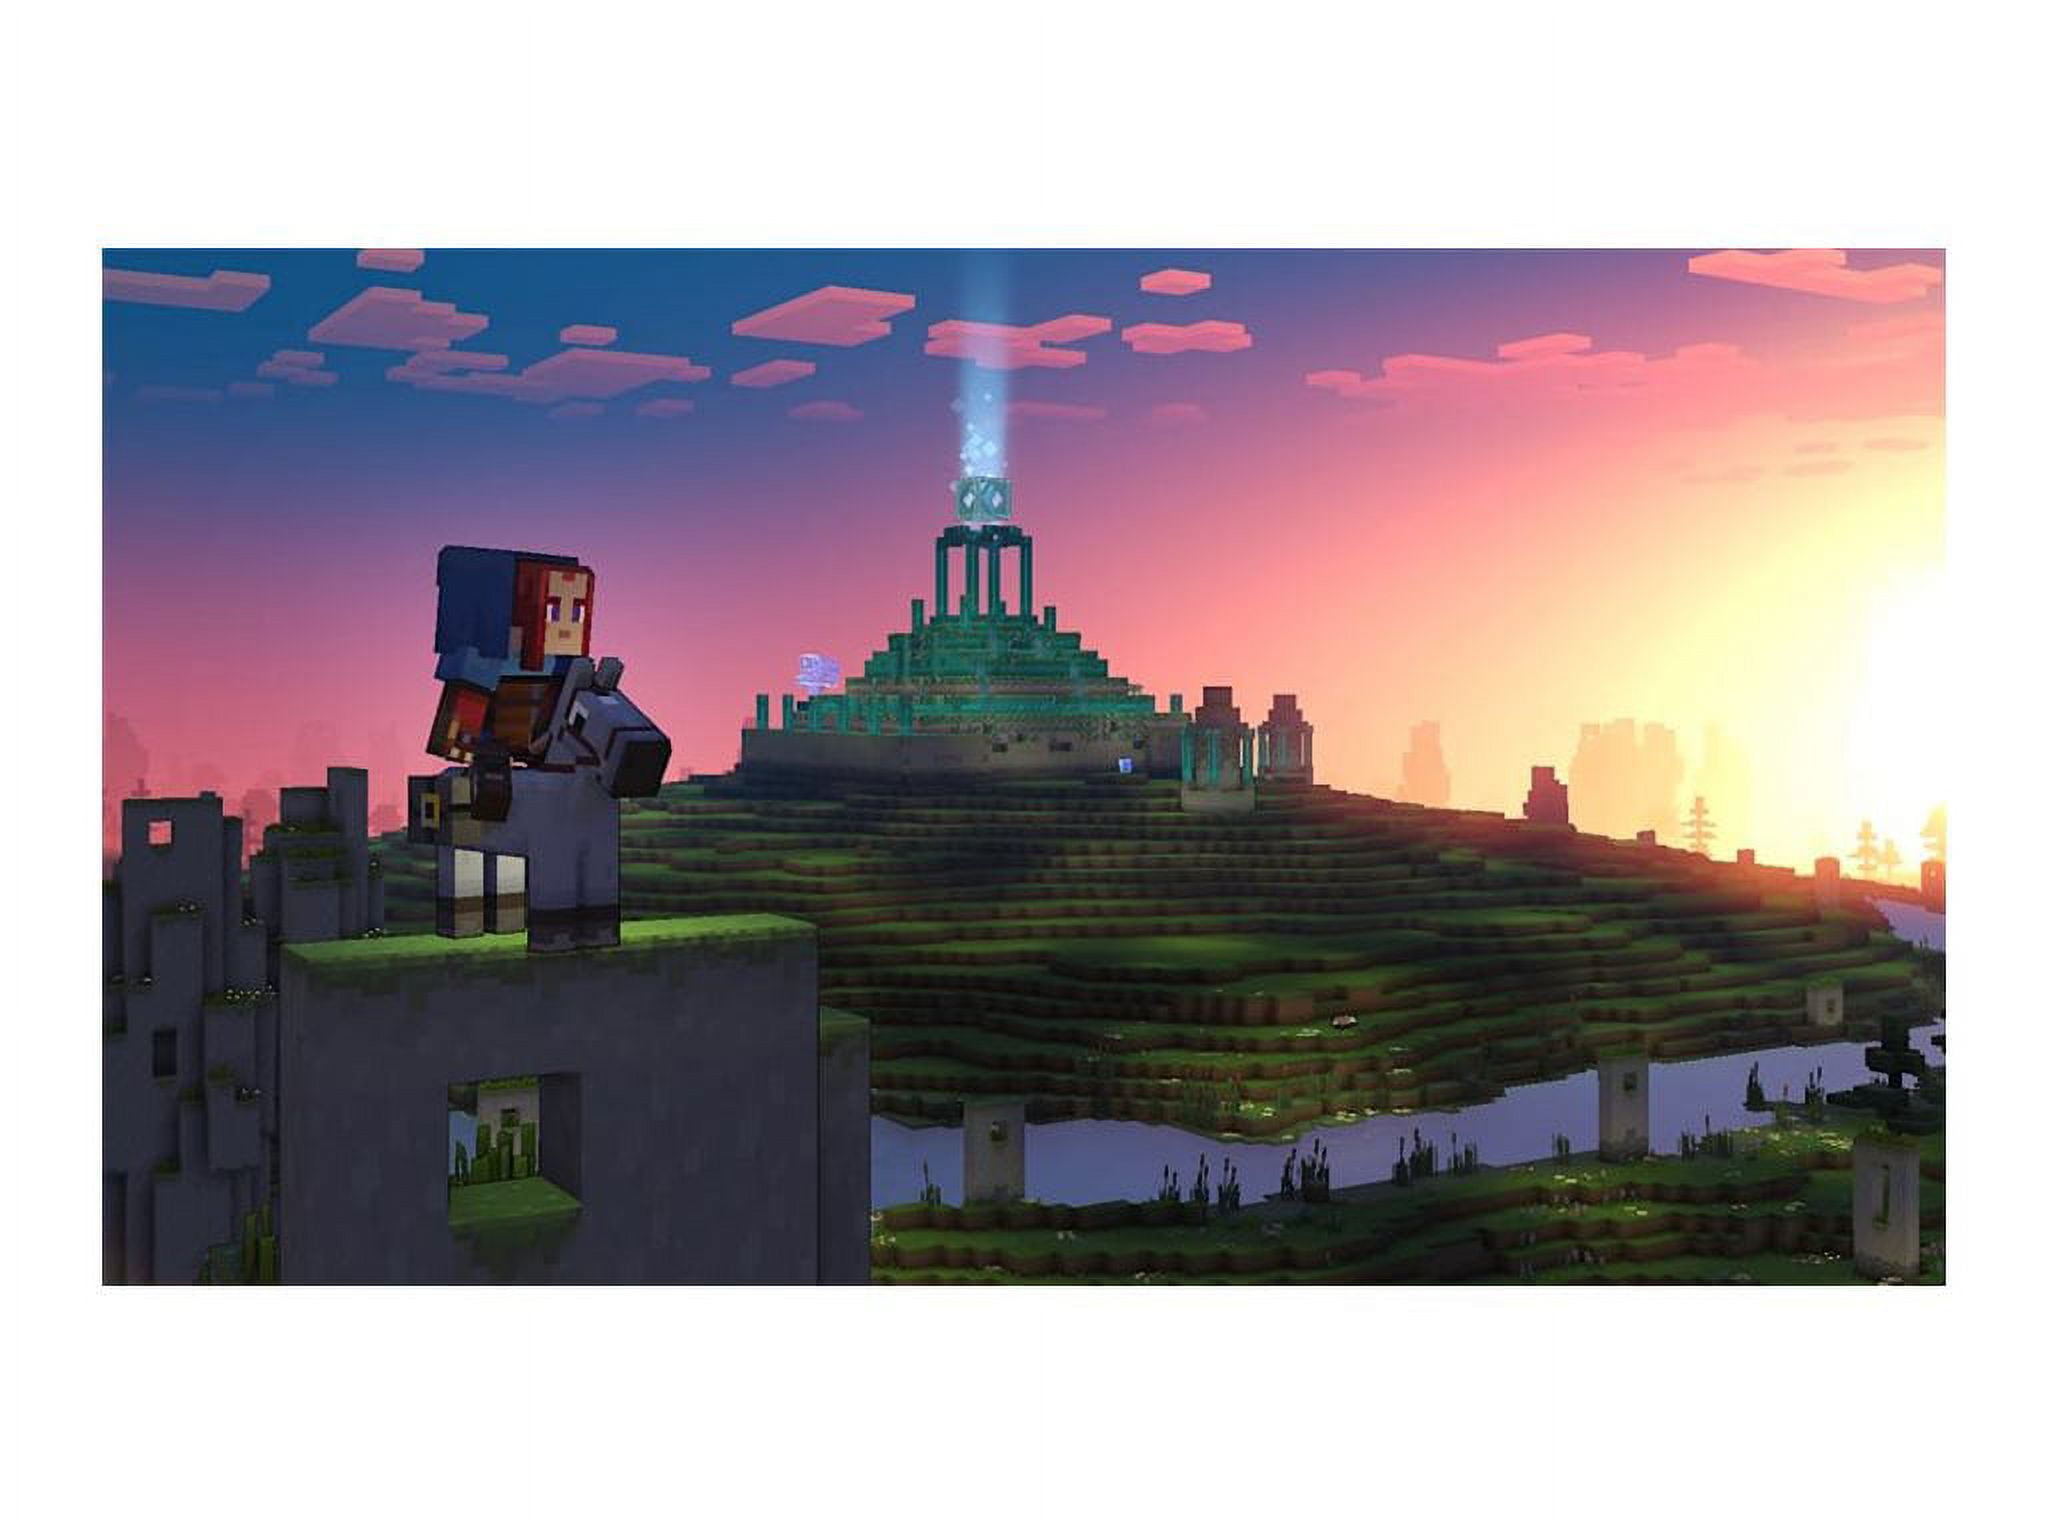 Minecraft: Story Mode Season 2 - Nintendo Switch 